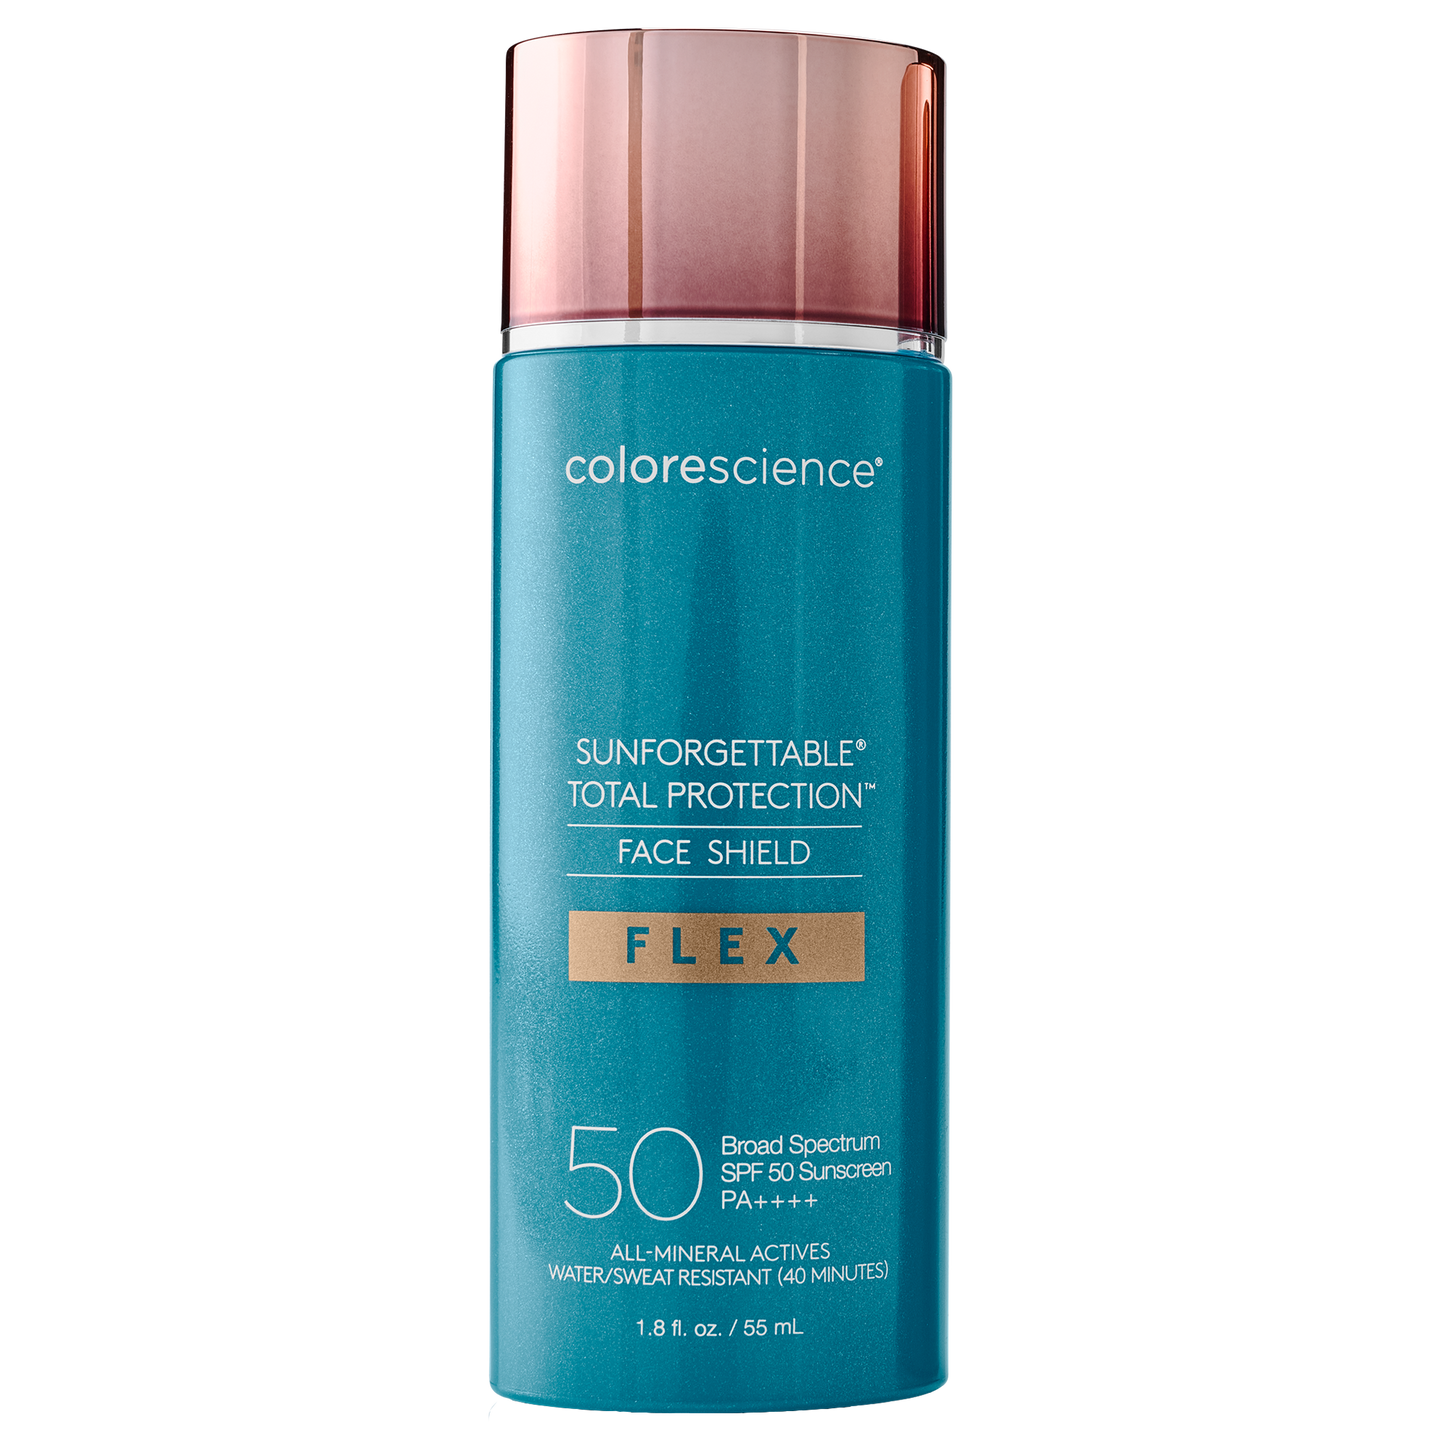 Colorescience Sunforgettable® Total Protection® Face Shield Flex SPF 50 in Medium